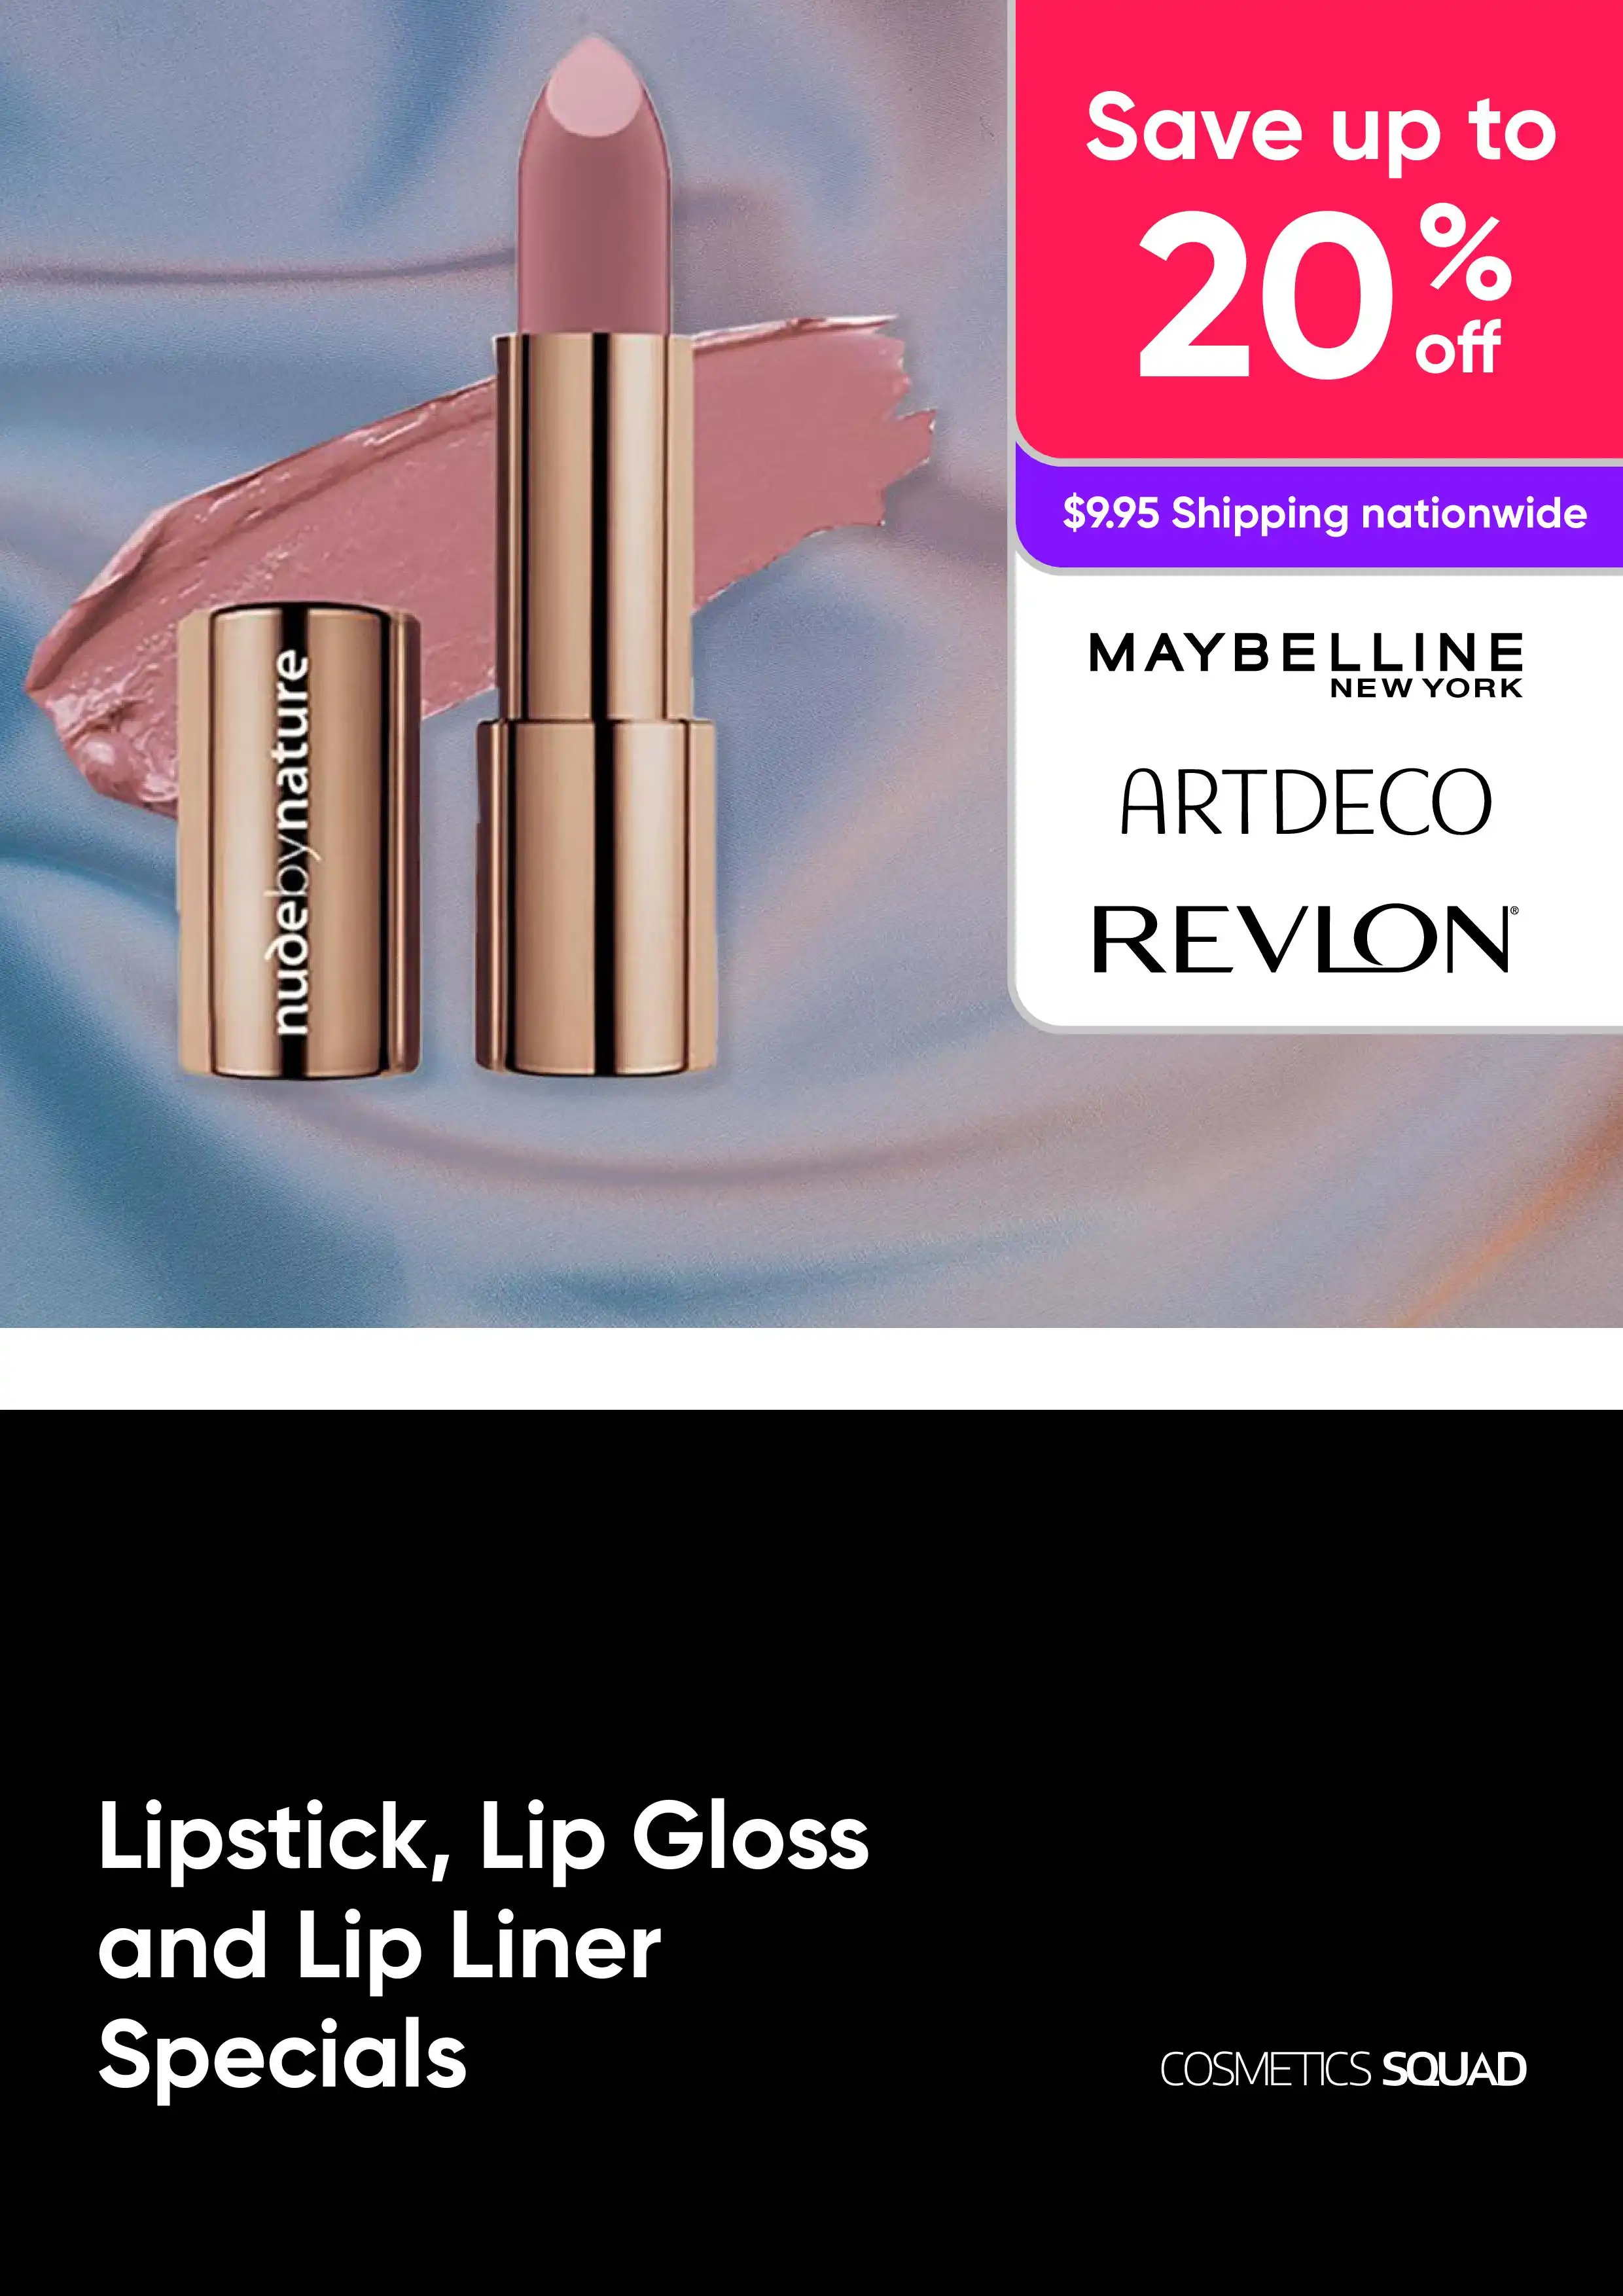 Lipstick, Lip Gloss and Lip Liner Specials - Maybelline, ARTDECO, Revlon - Deals from $6